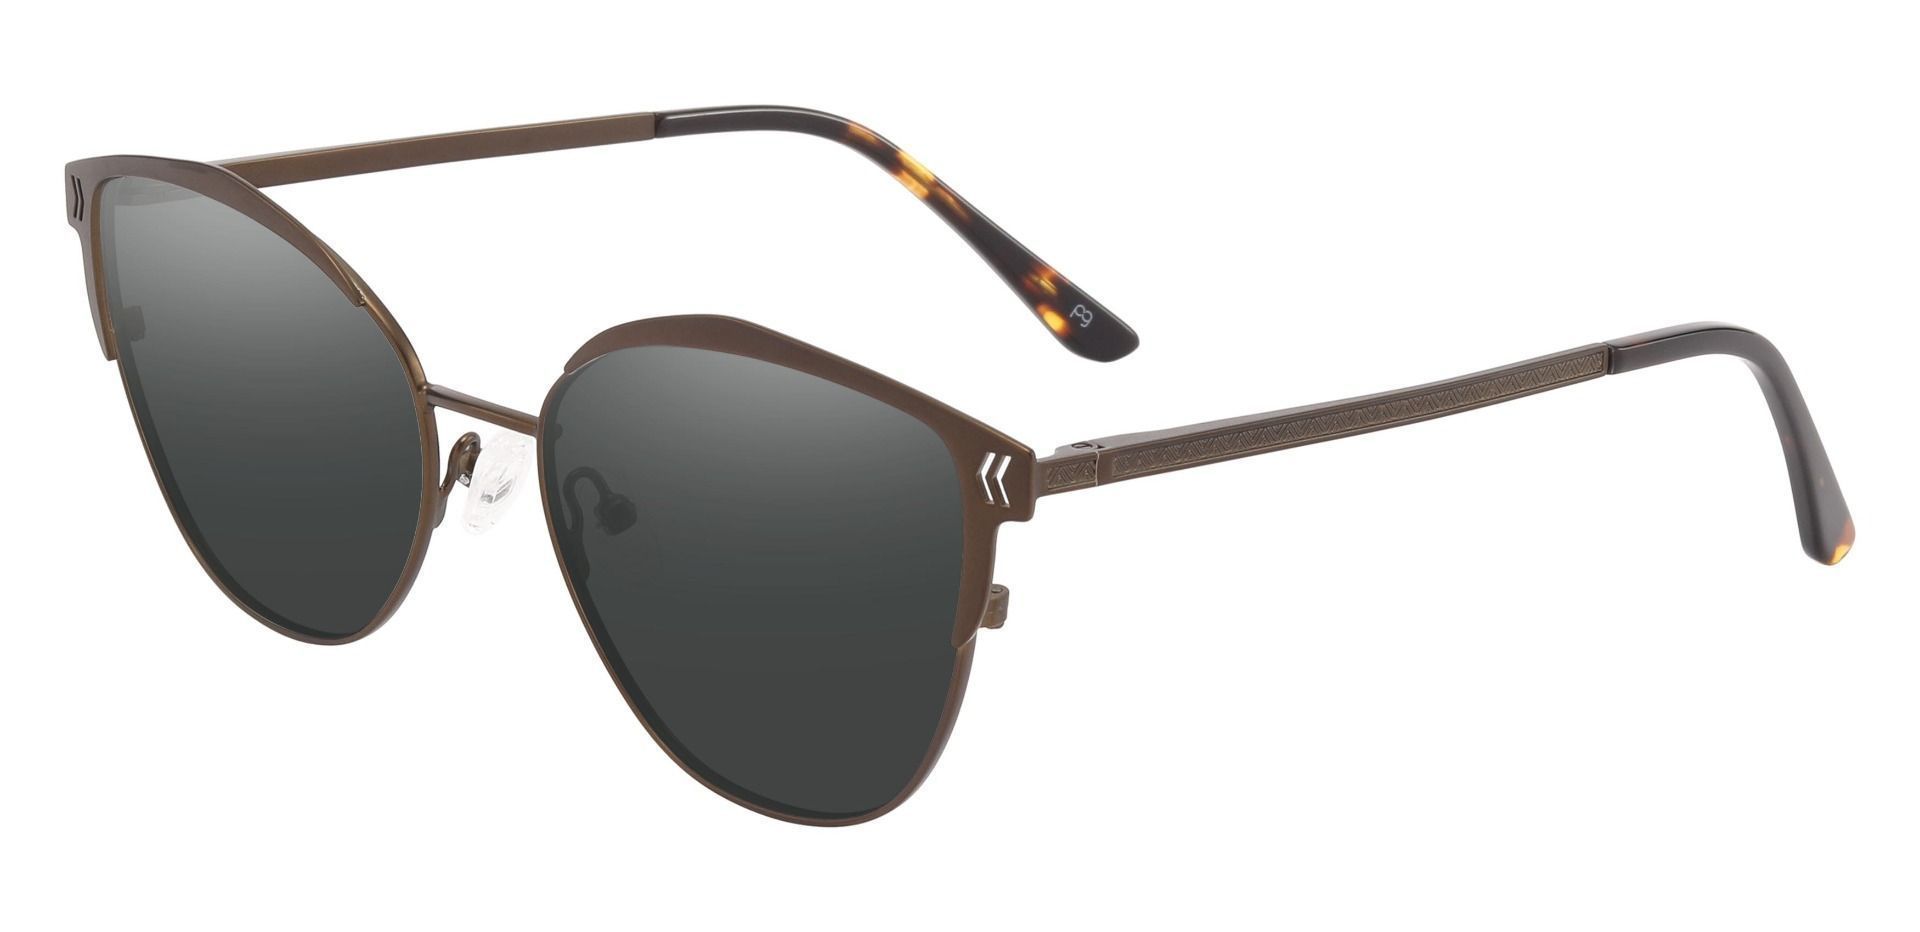 Hampton Geometric Prescription Sunglasses - Brown Frame With Gray Lenses